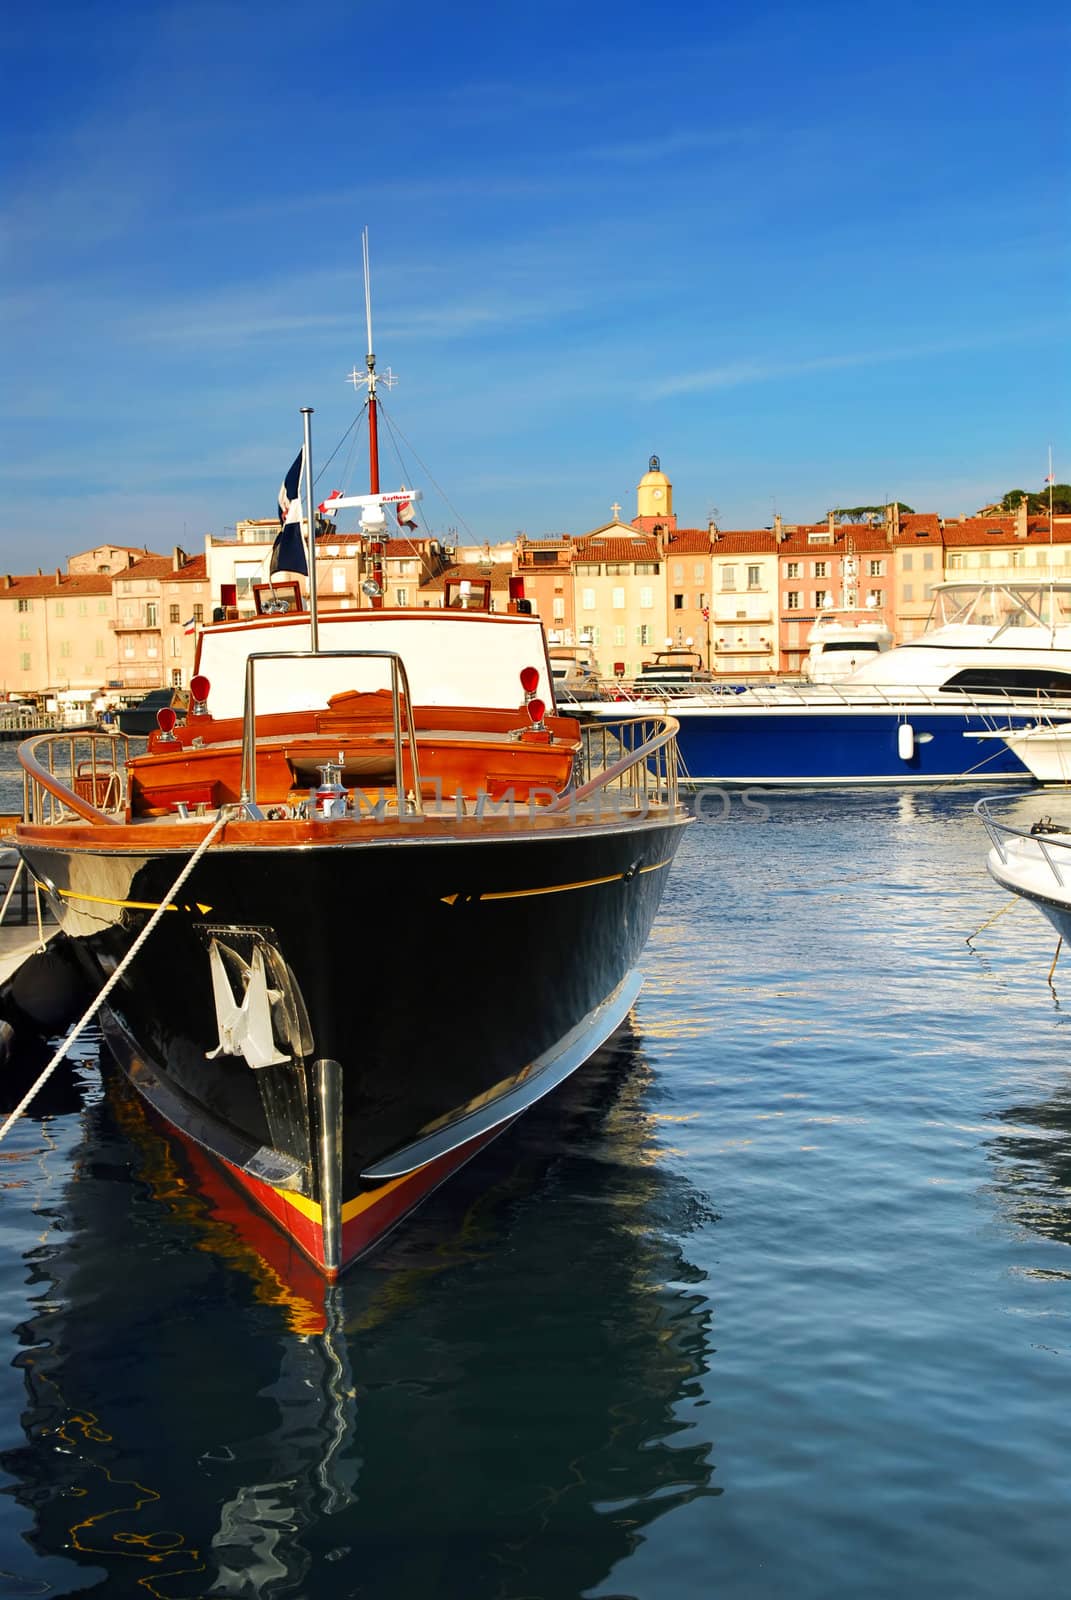 Luxury boats docked in St. Tropez in French Riviera